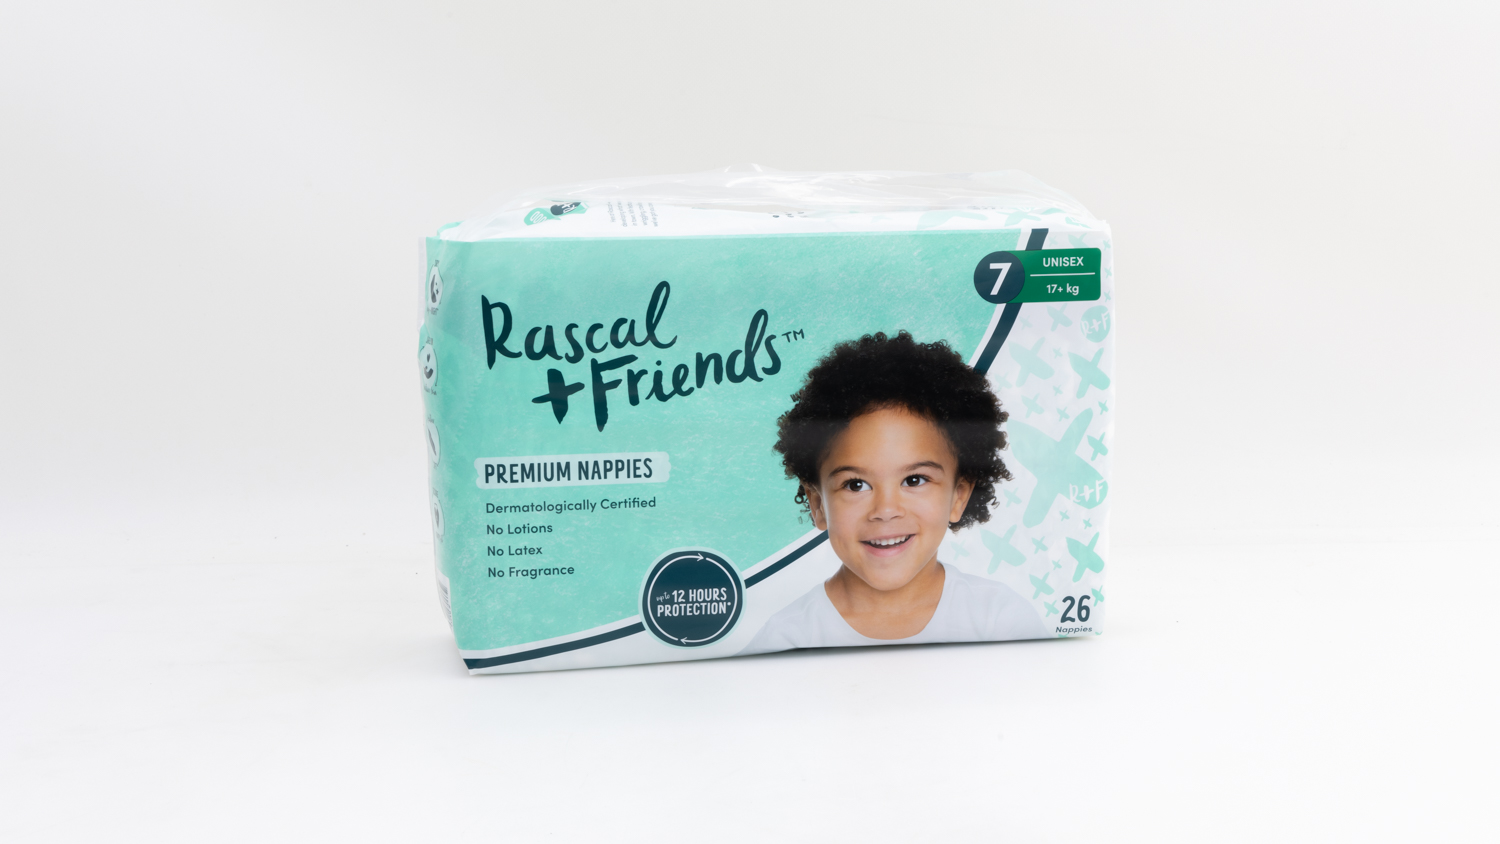 Rascal + Friends Premium Nappies Unisex Size 7 carousel image